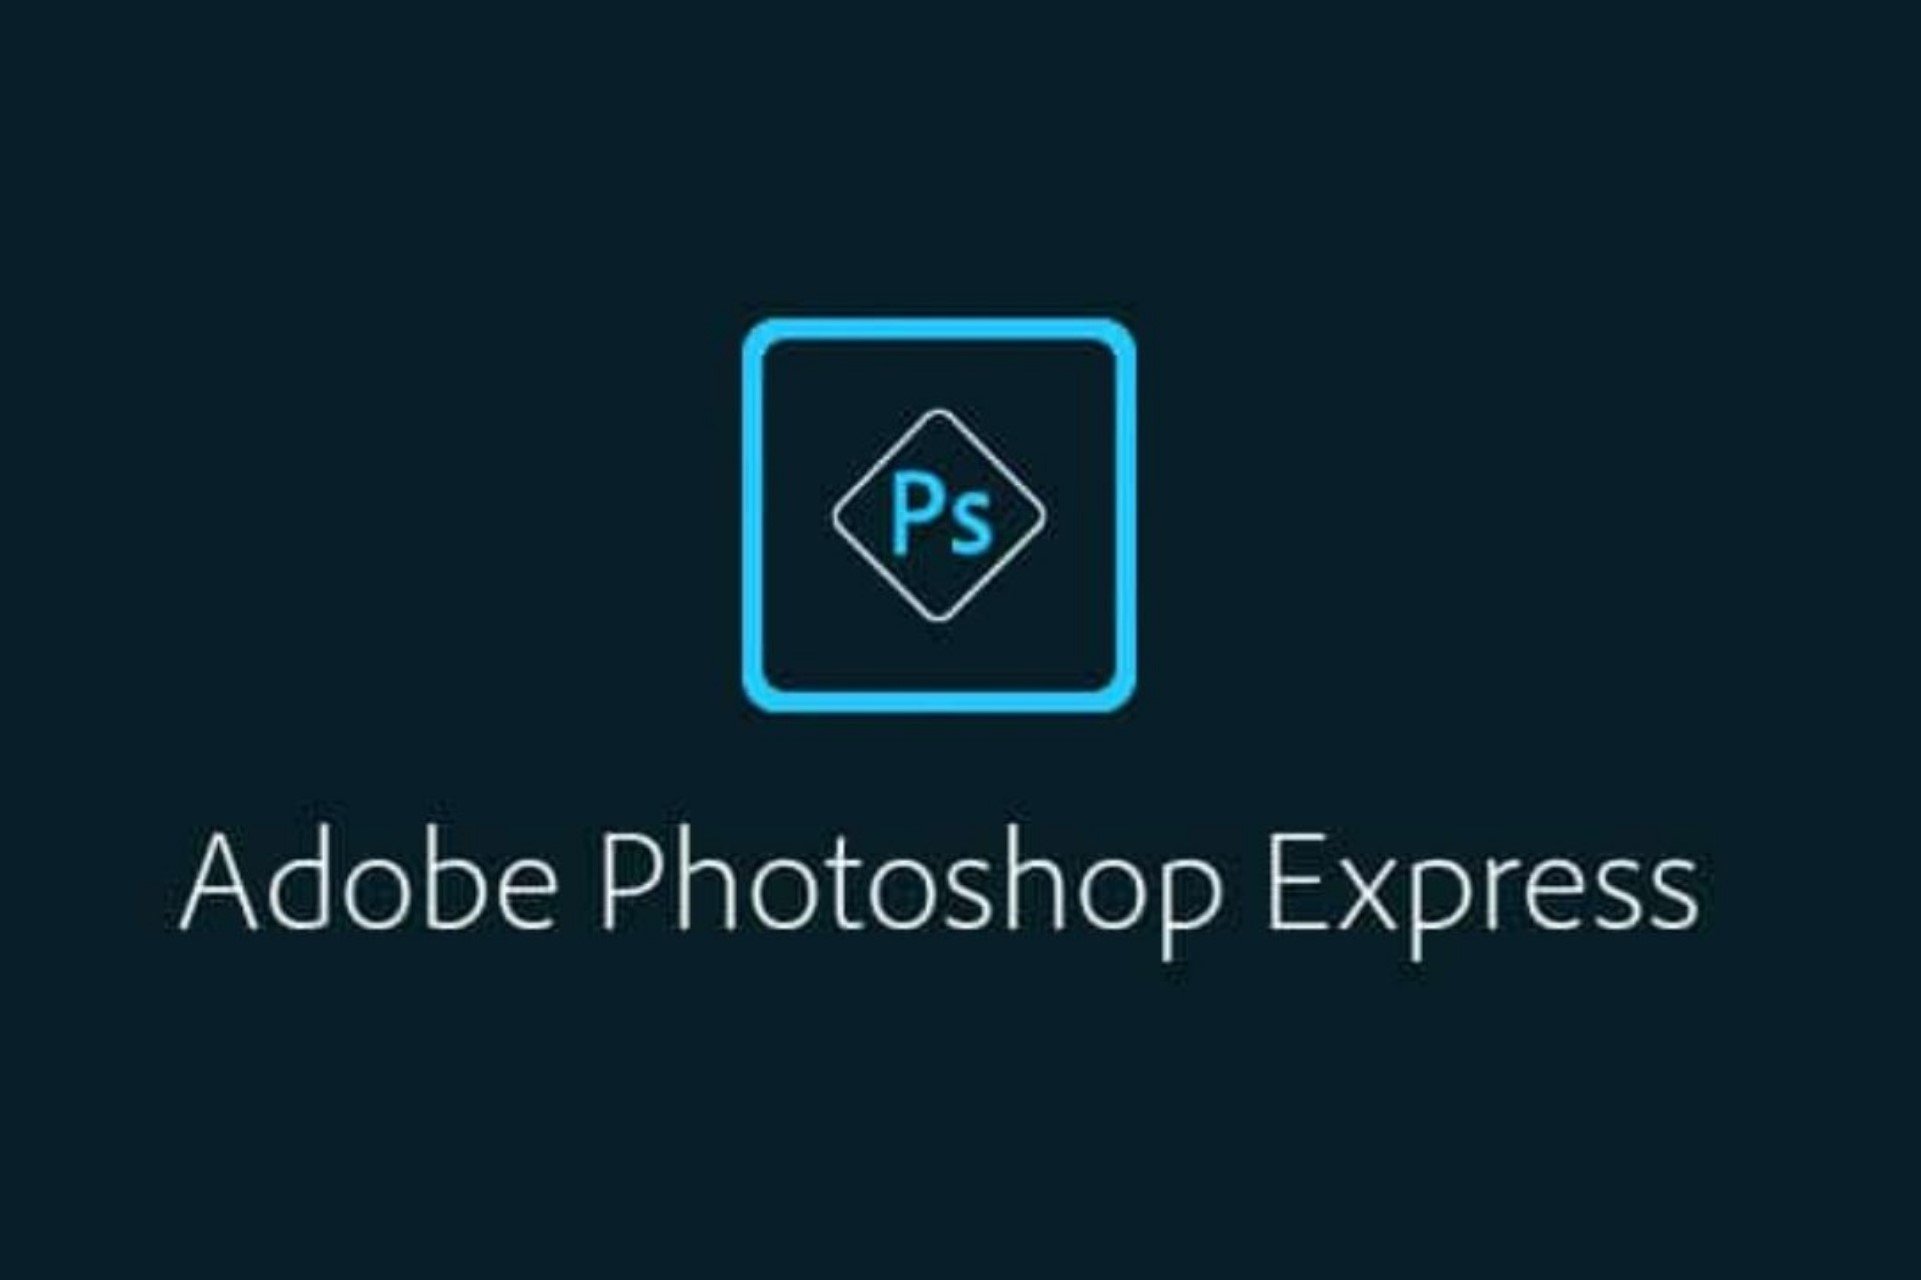 adobe photoshop express free download for windows 8 64 bit